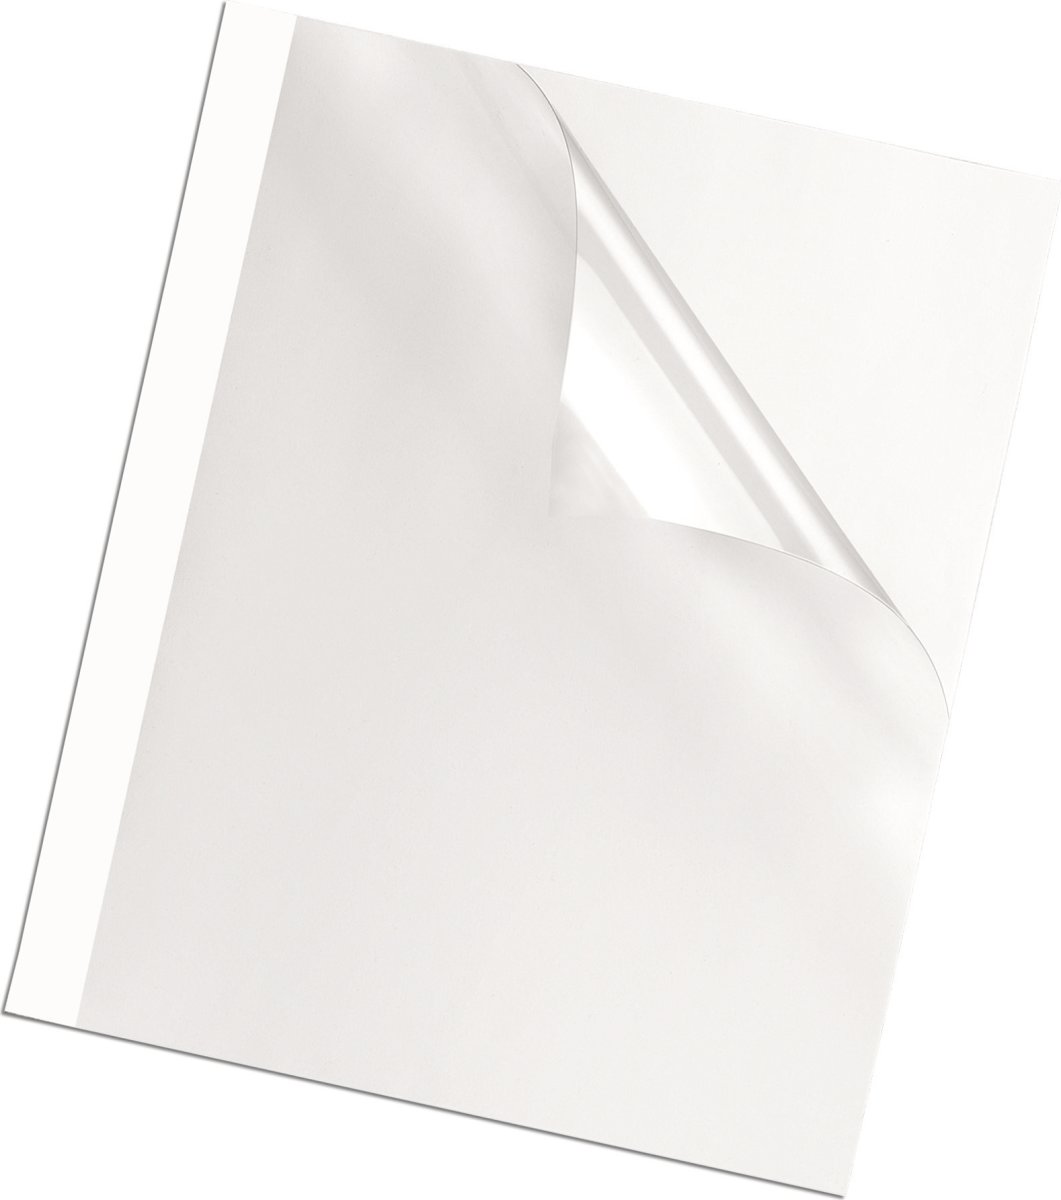 Fellowes standard thermal binding cover 3 mm, hvid